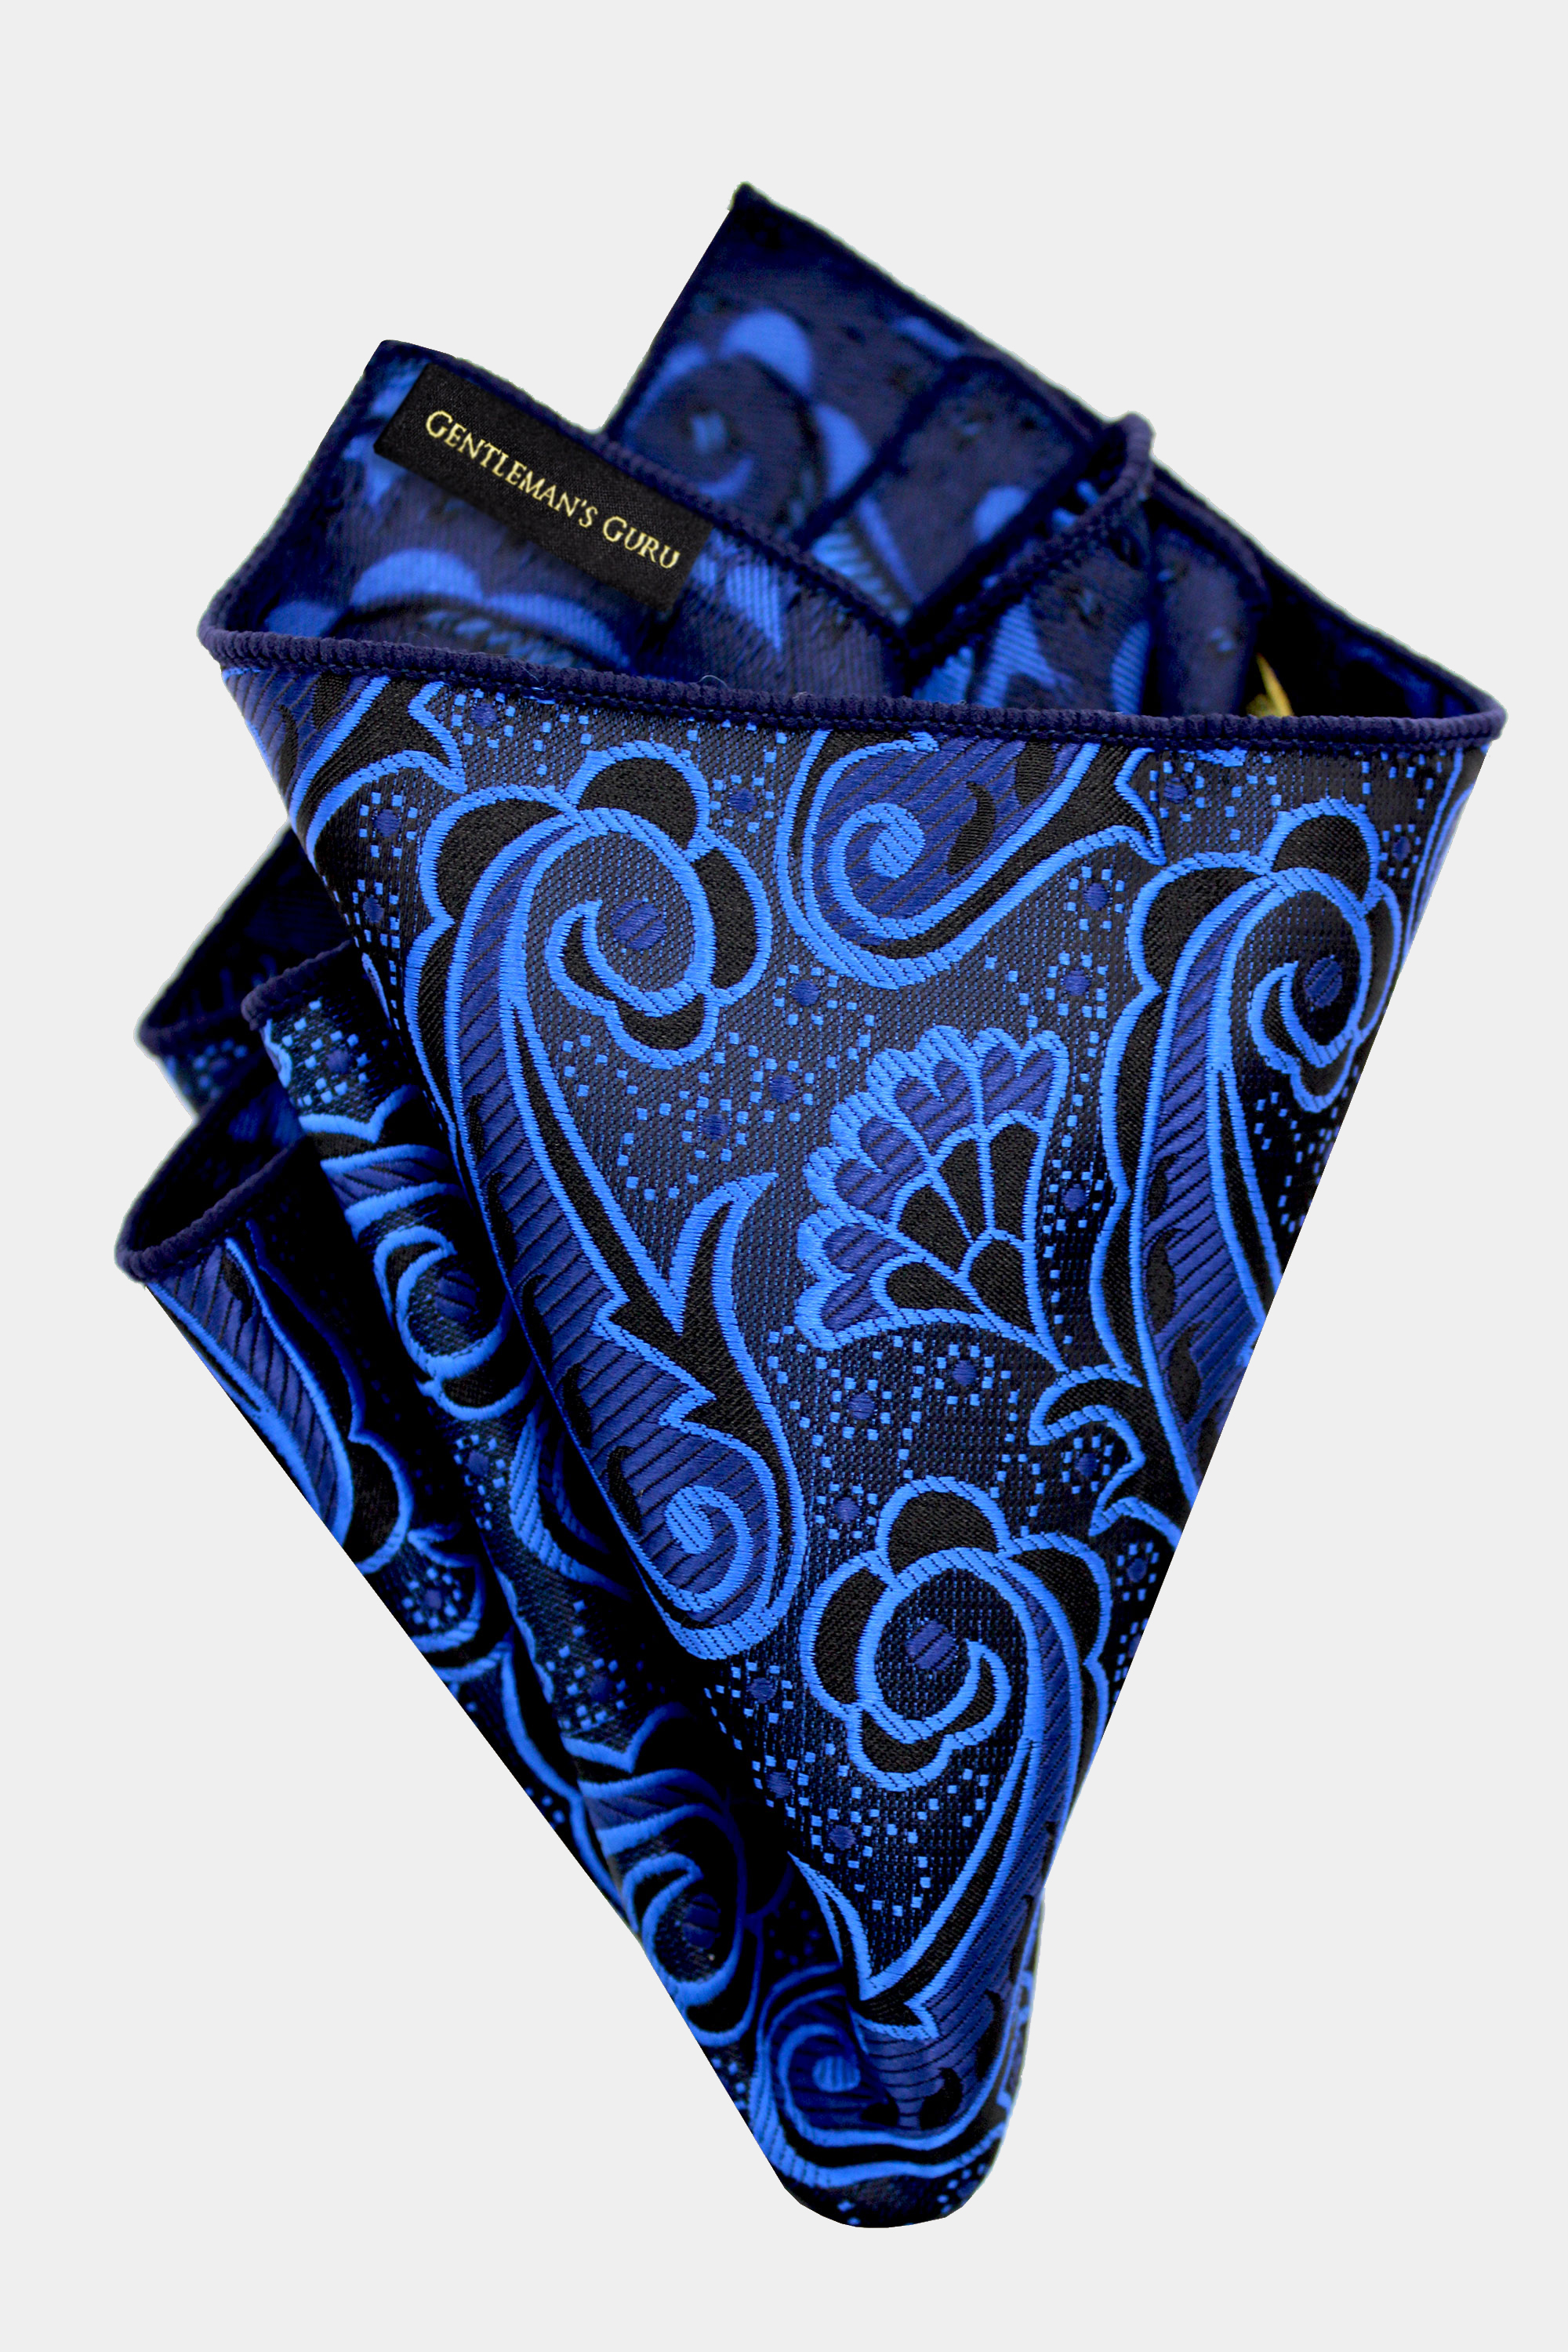 Royal-Blue-and-Black-Pocket-Square-Handkerchief-from-Genbtlemansguru.com_